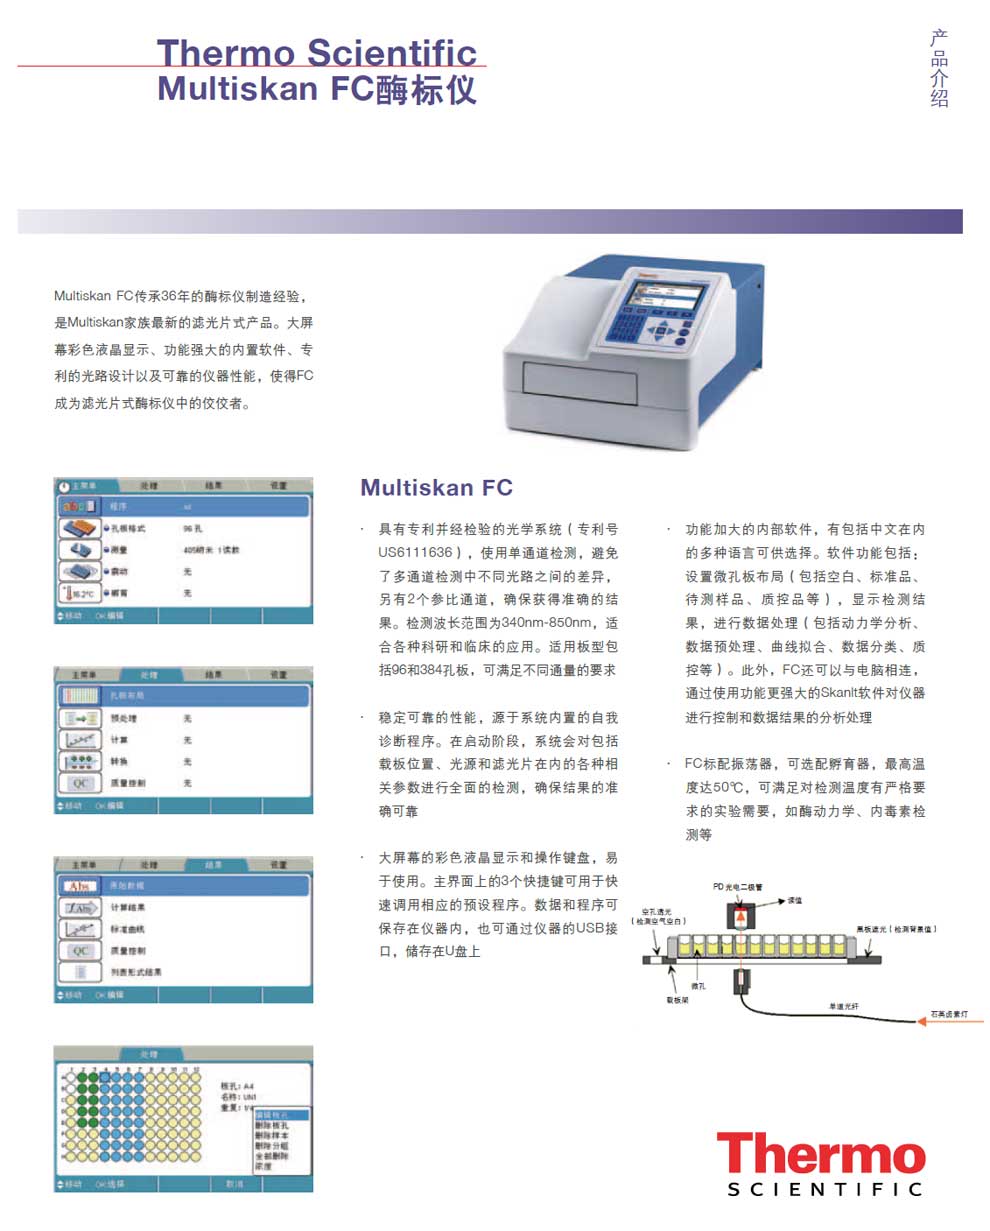 Multiskan-FC带孵育酶标仪-彩.jpg